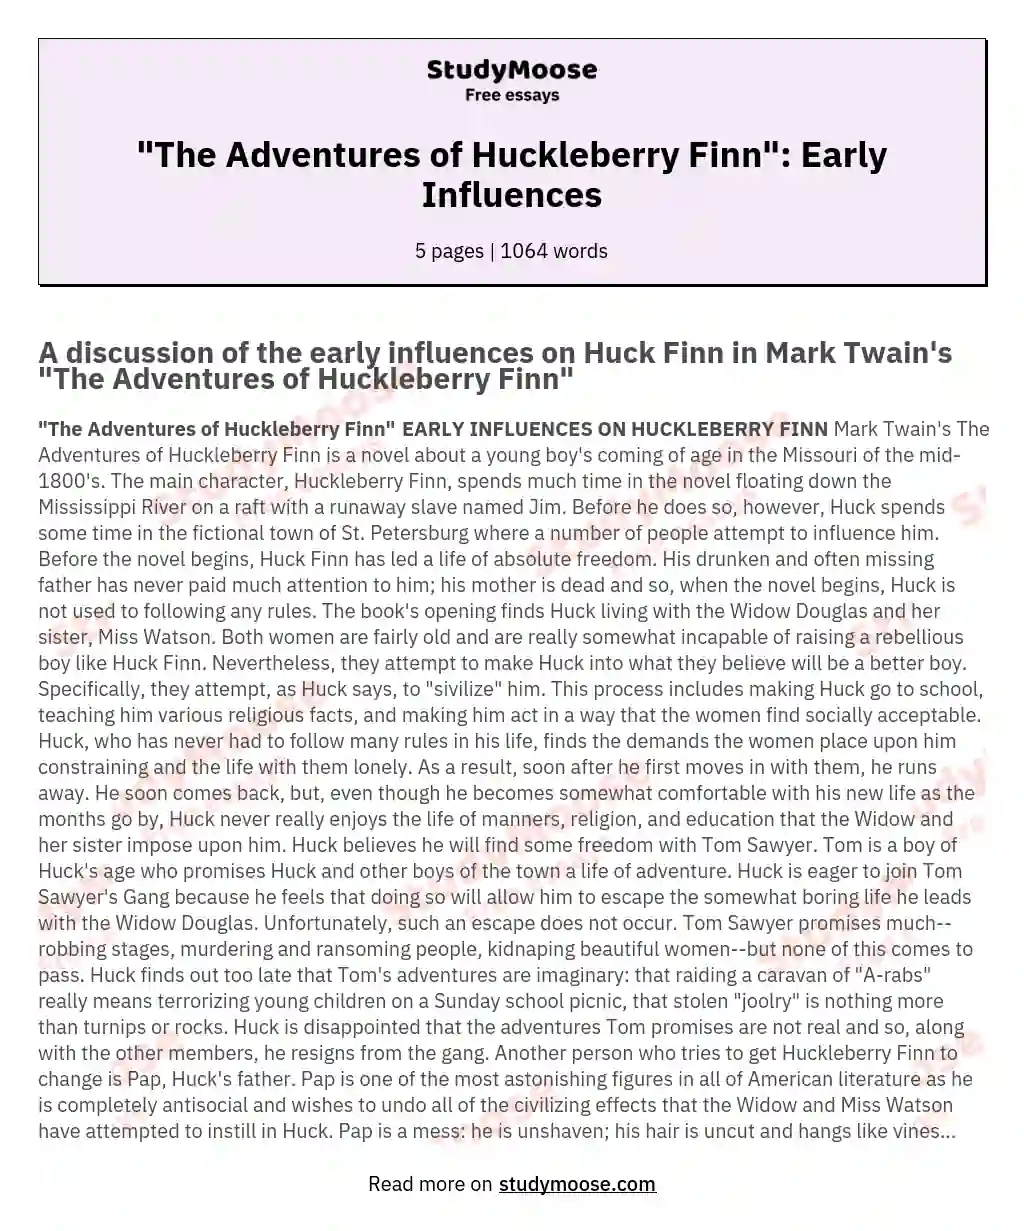 "The Adventures of Huckleberry Finn": Early Influences essay